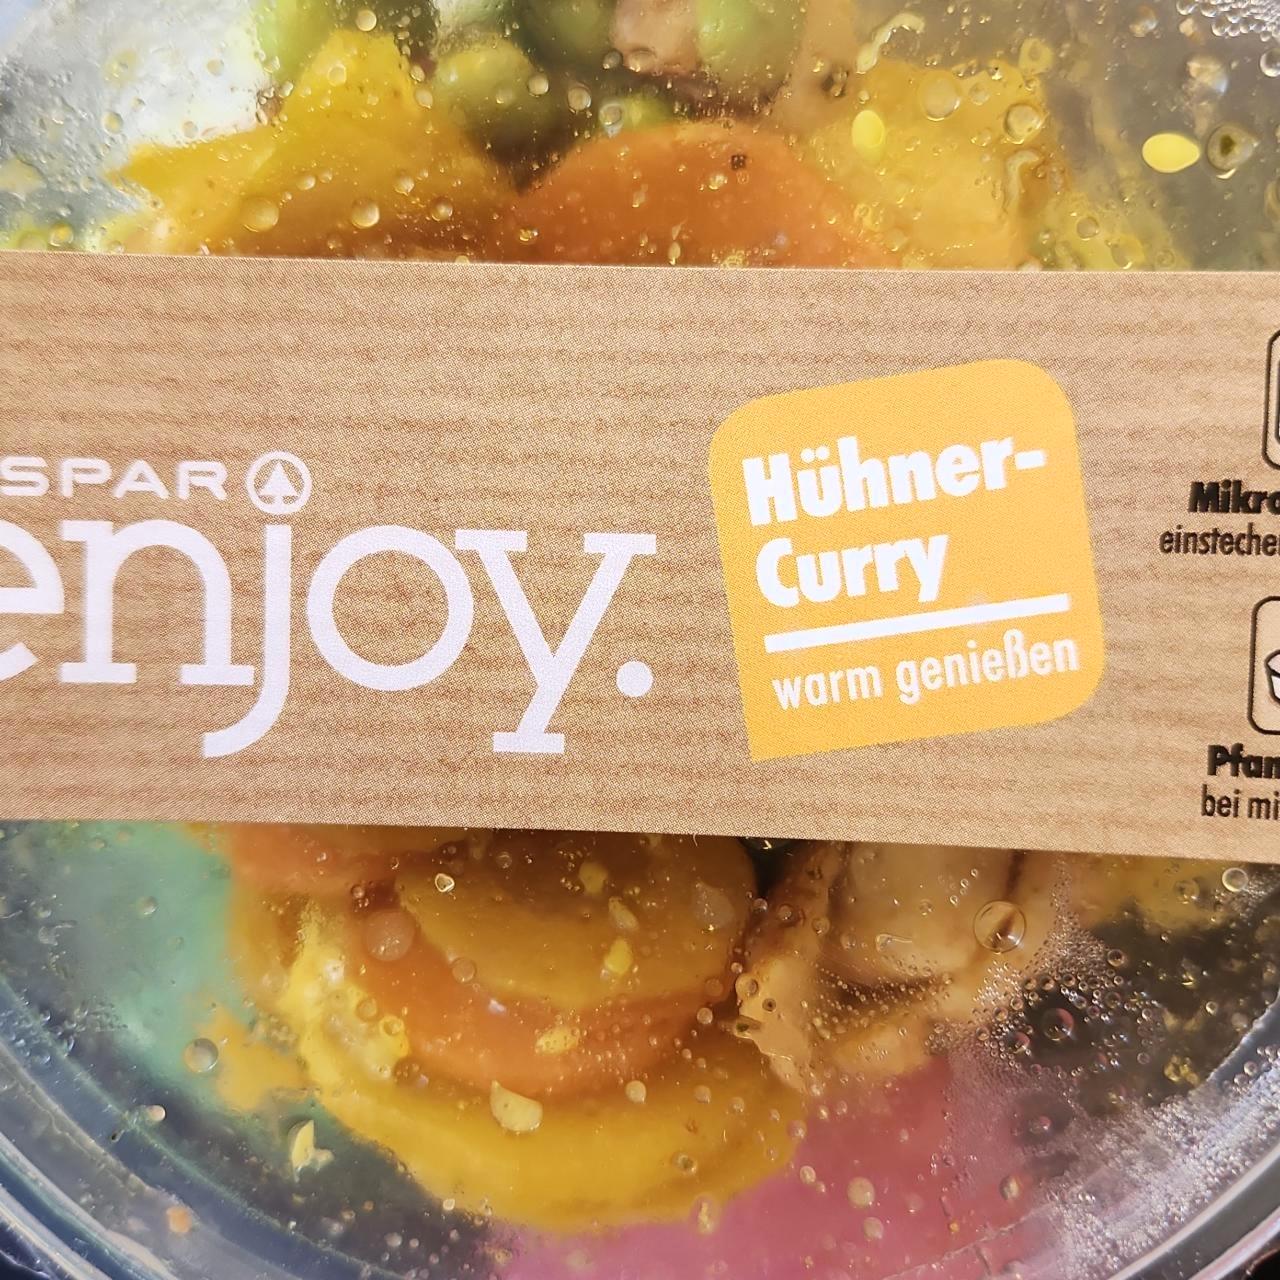 Képek - Hühner-Curry Spar enjoy